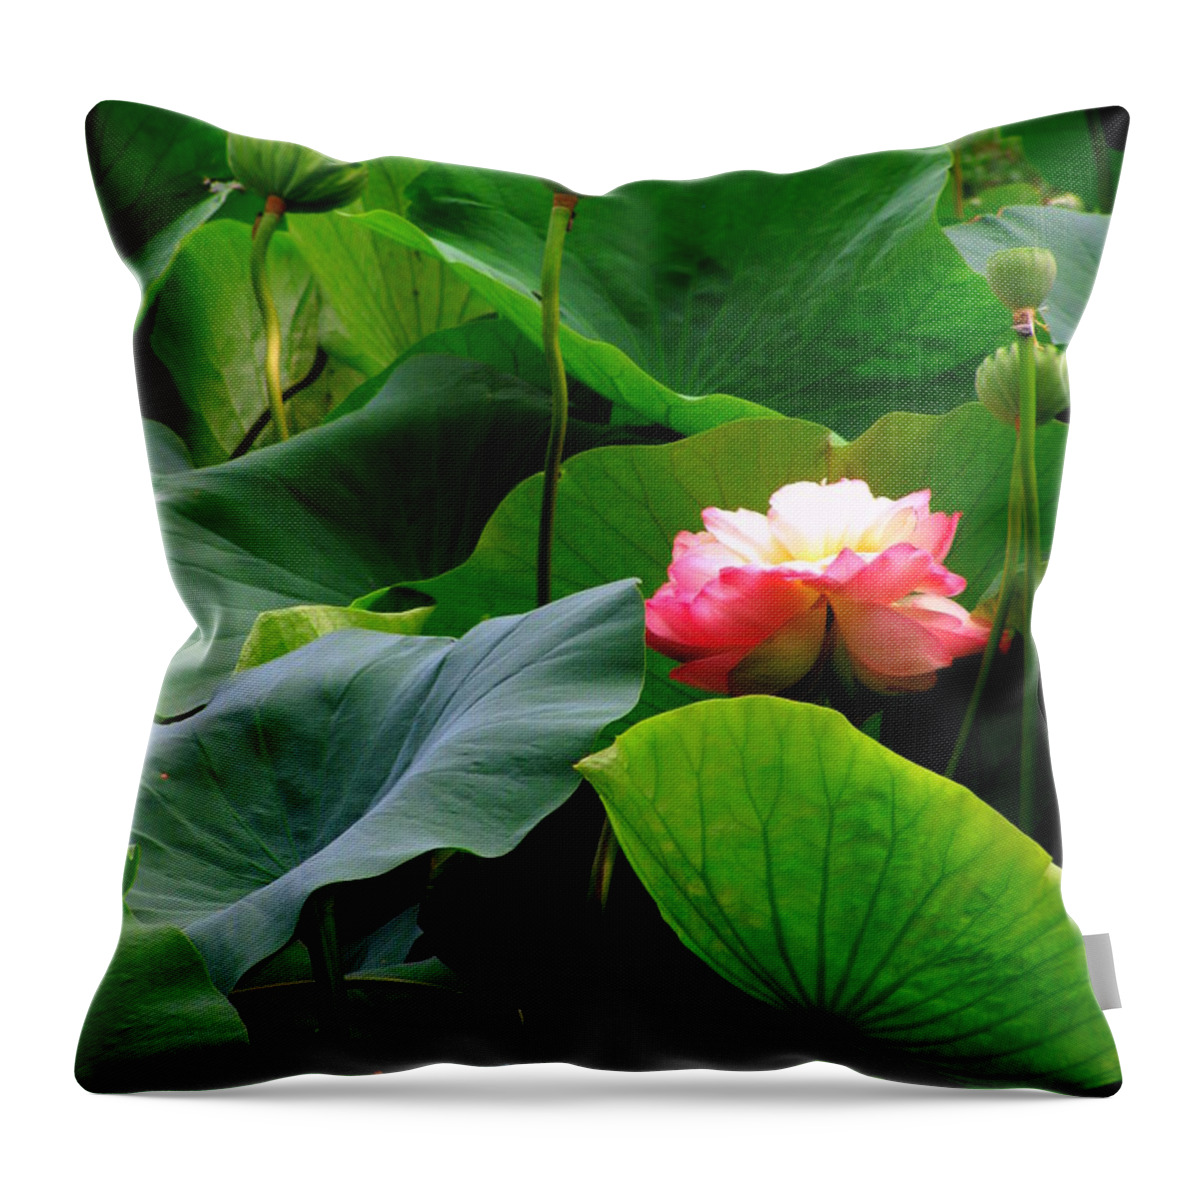 Lotus Throw Pillow featuring the photograph Lotus Forms by Deborah Crew-Johnson